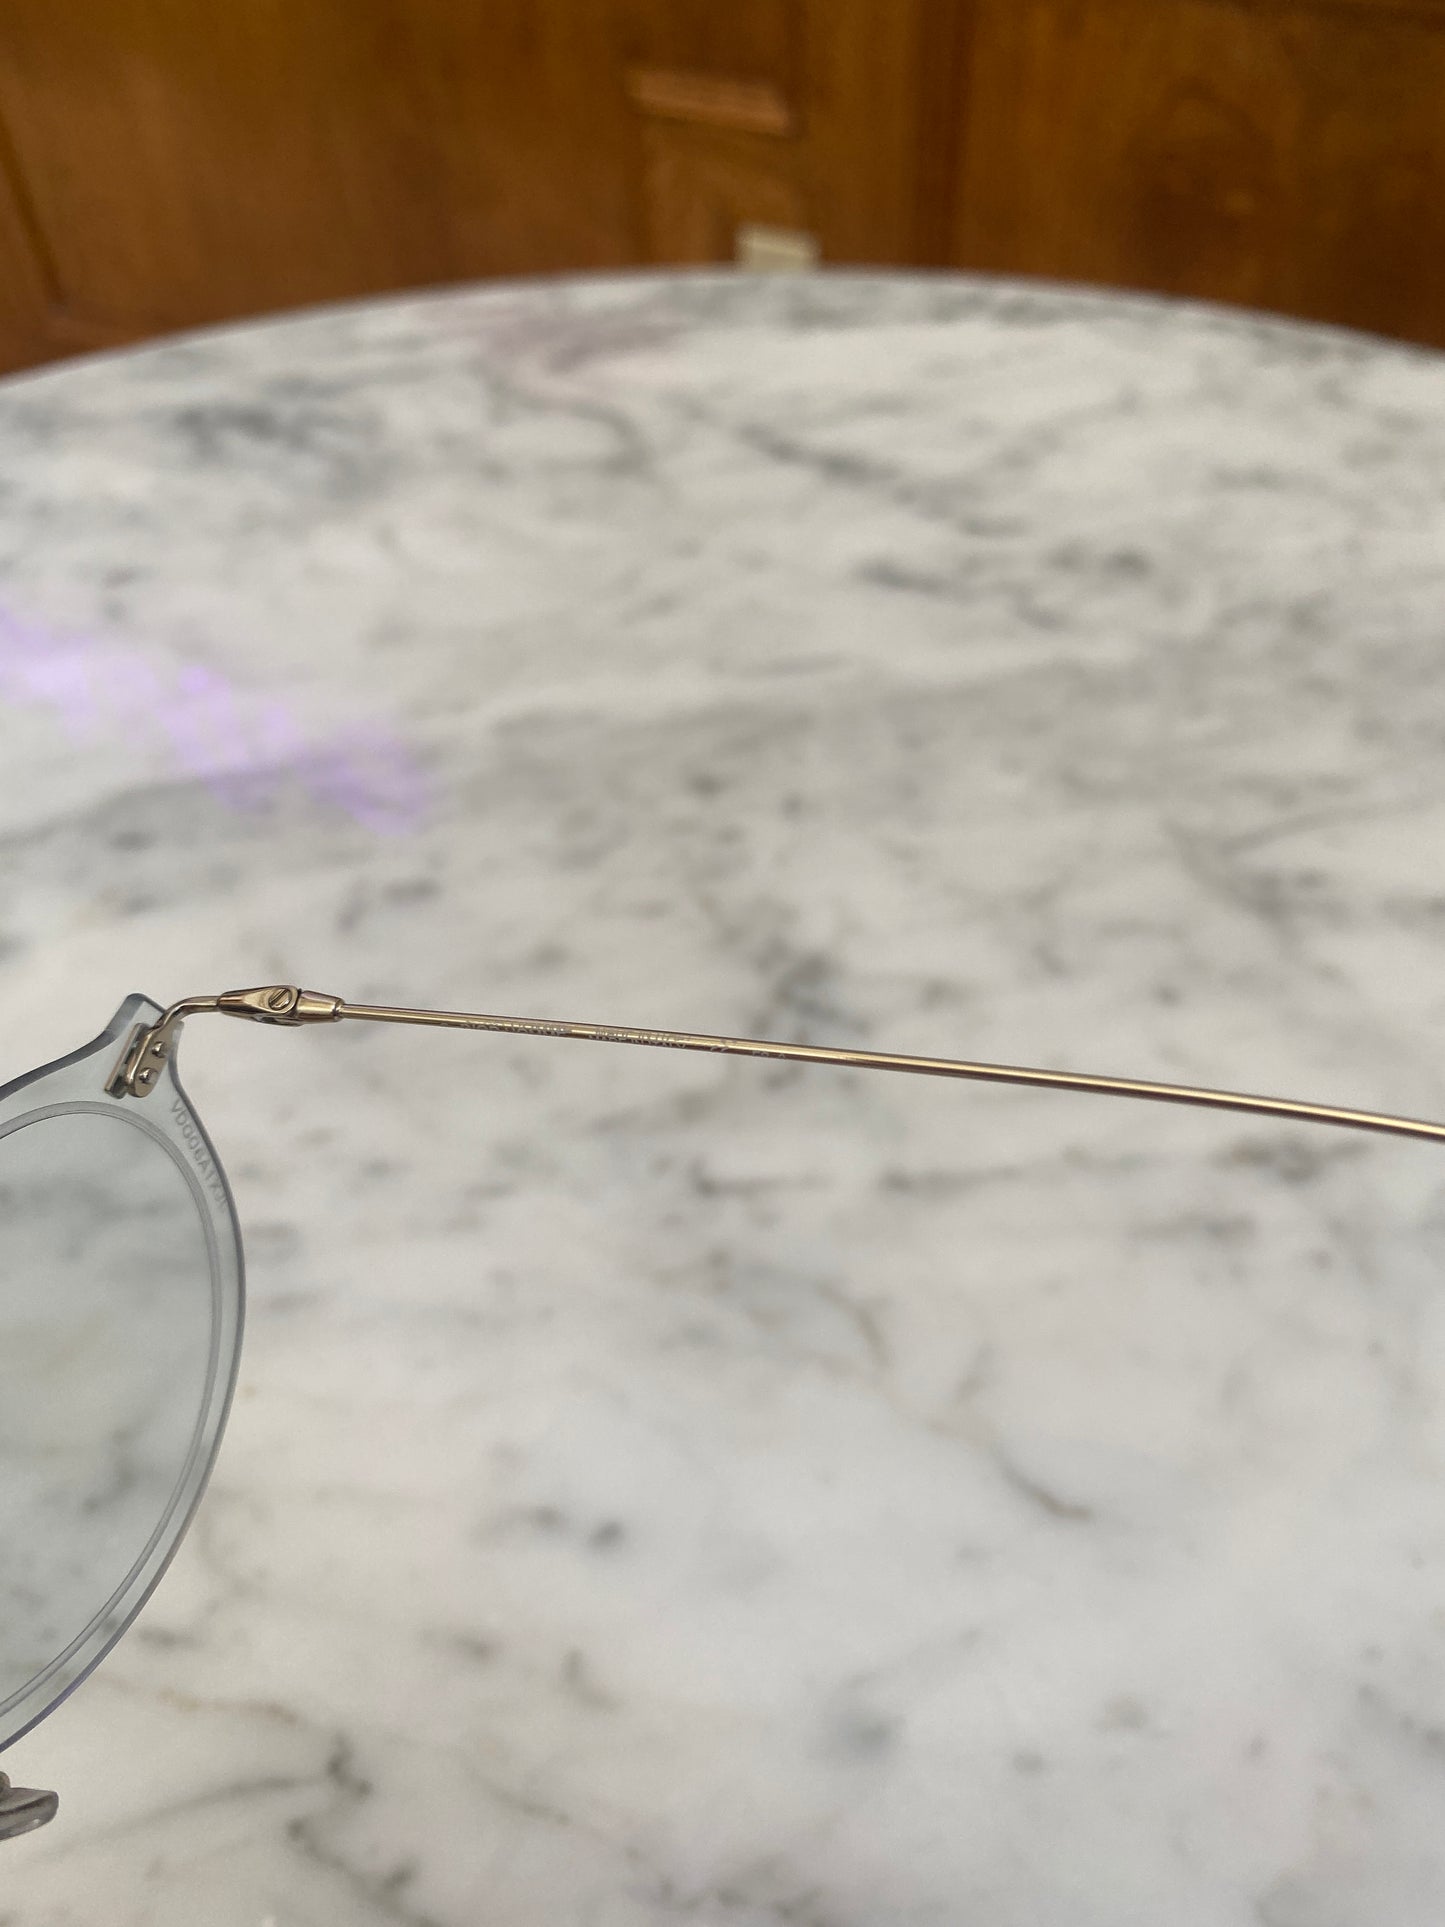 Dior - Clear Lens Chroma 3 Sunglasses